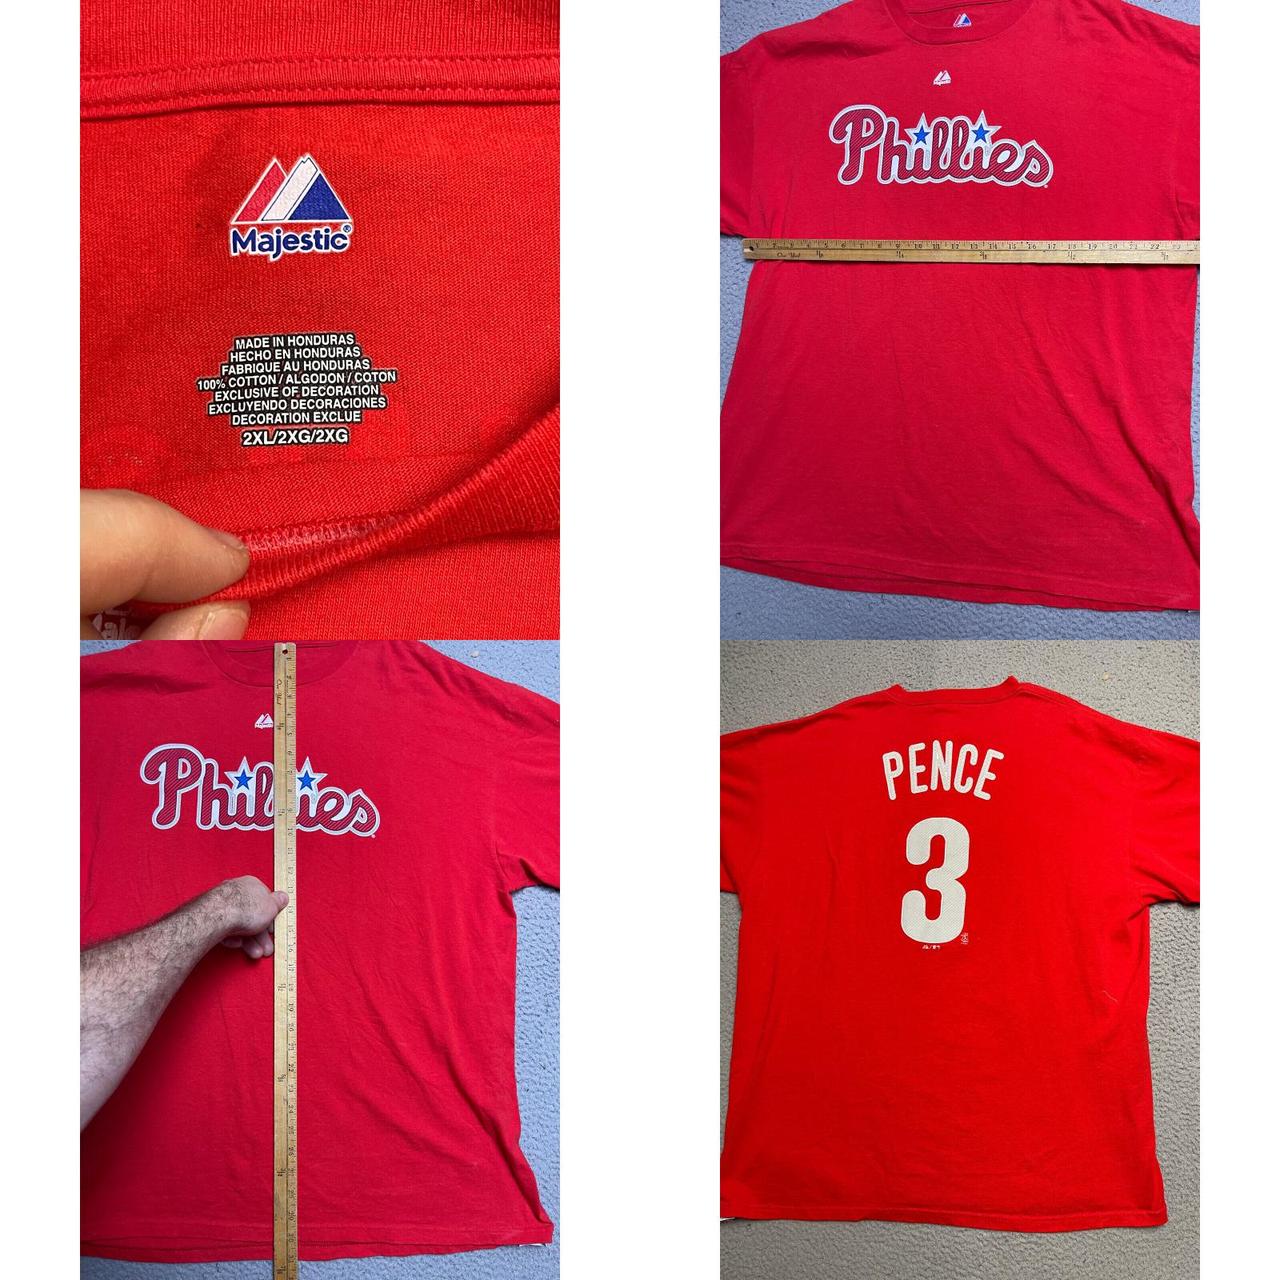 Philadelphia Phillies Shirt Men's Medium Majestic Short Sleeve Crew Neck MLB